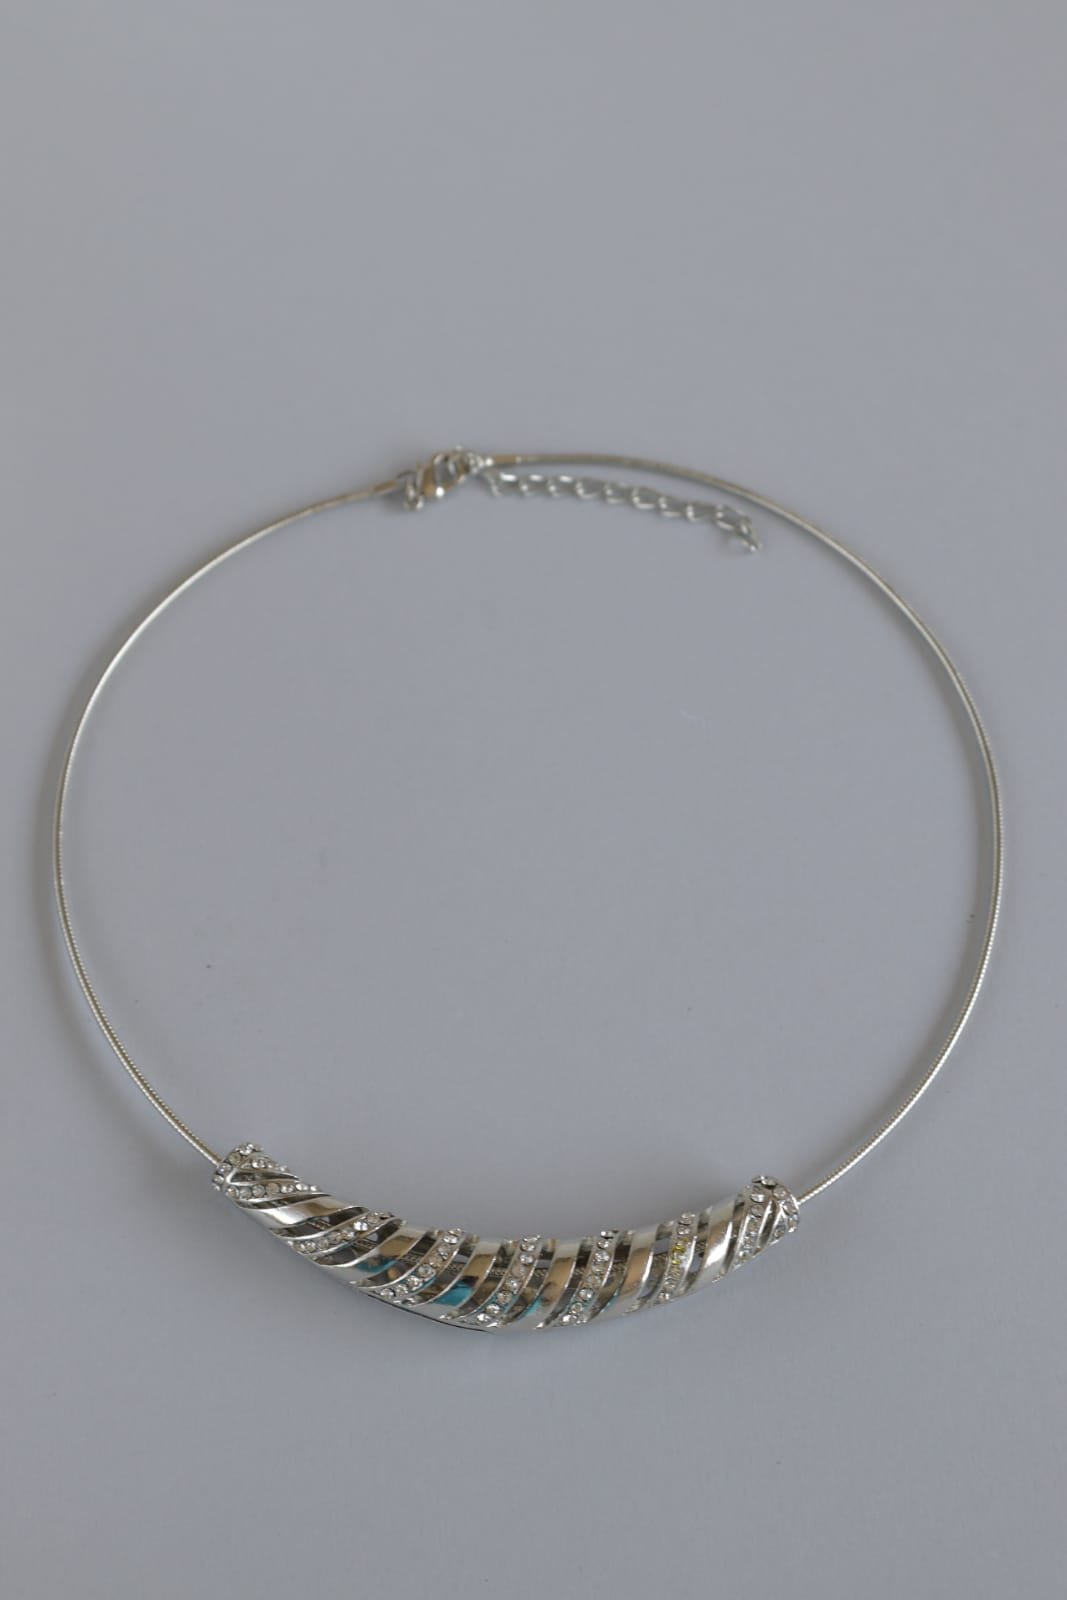 Silver Choker Necklace With a Swirl Pendant - Kila Online Shop